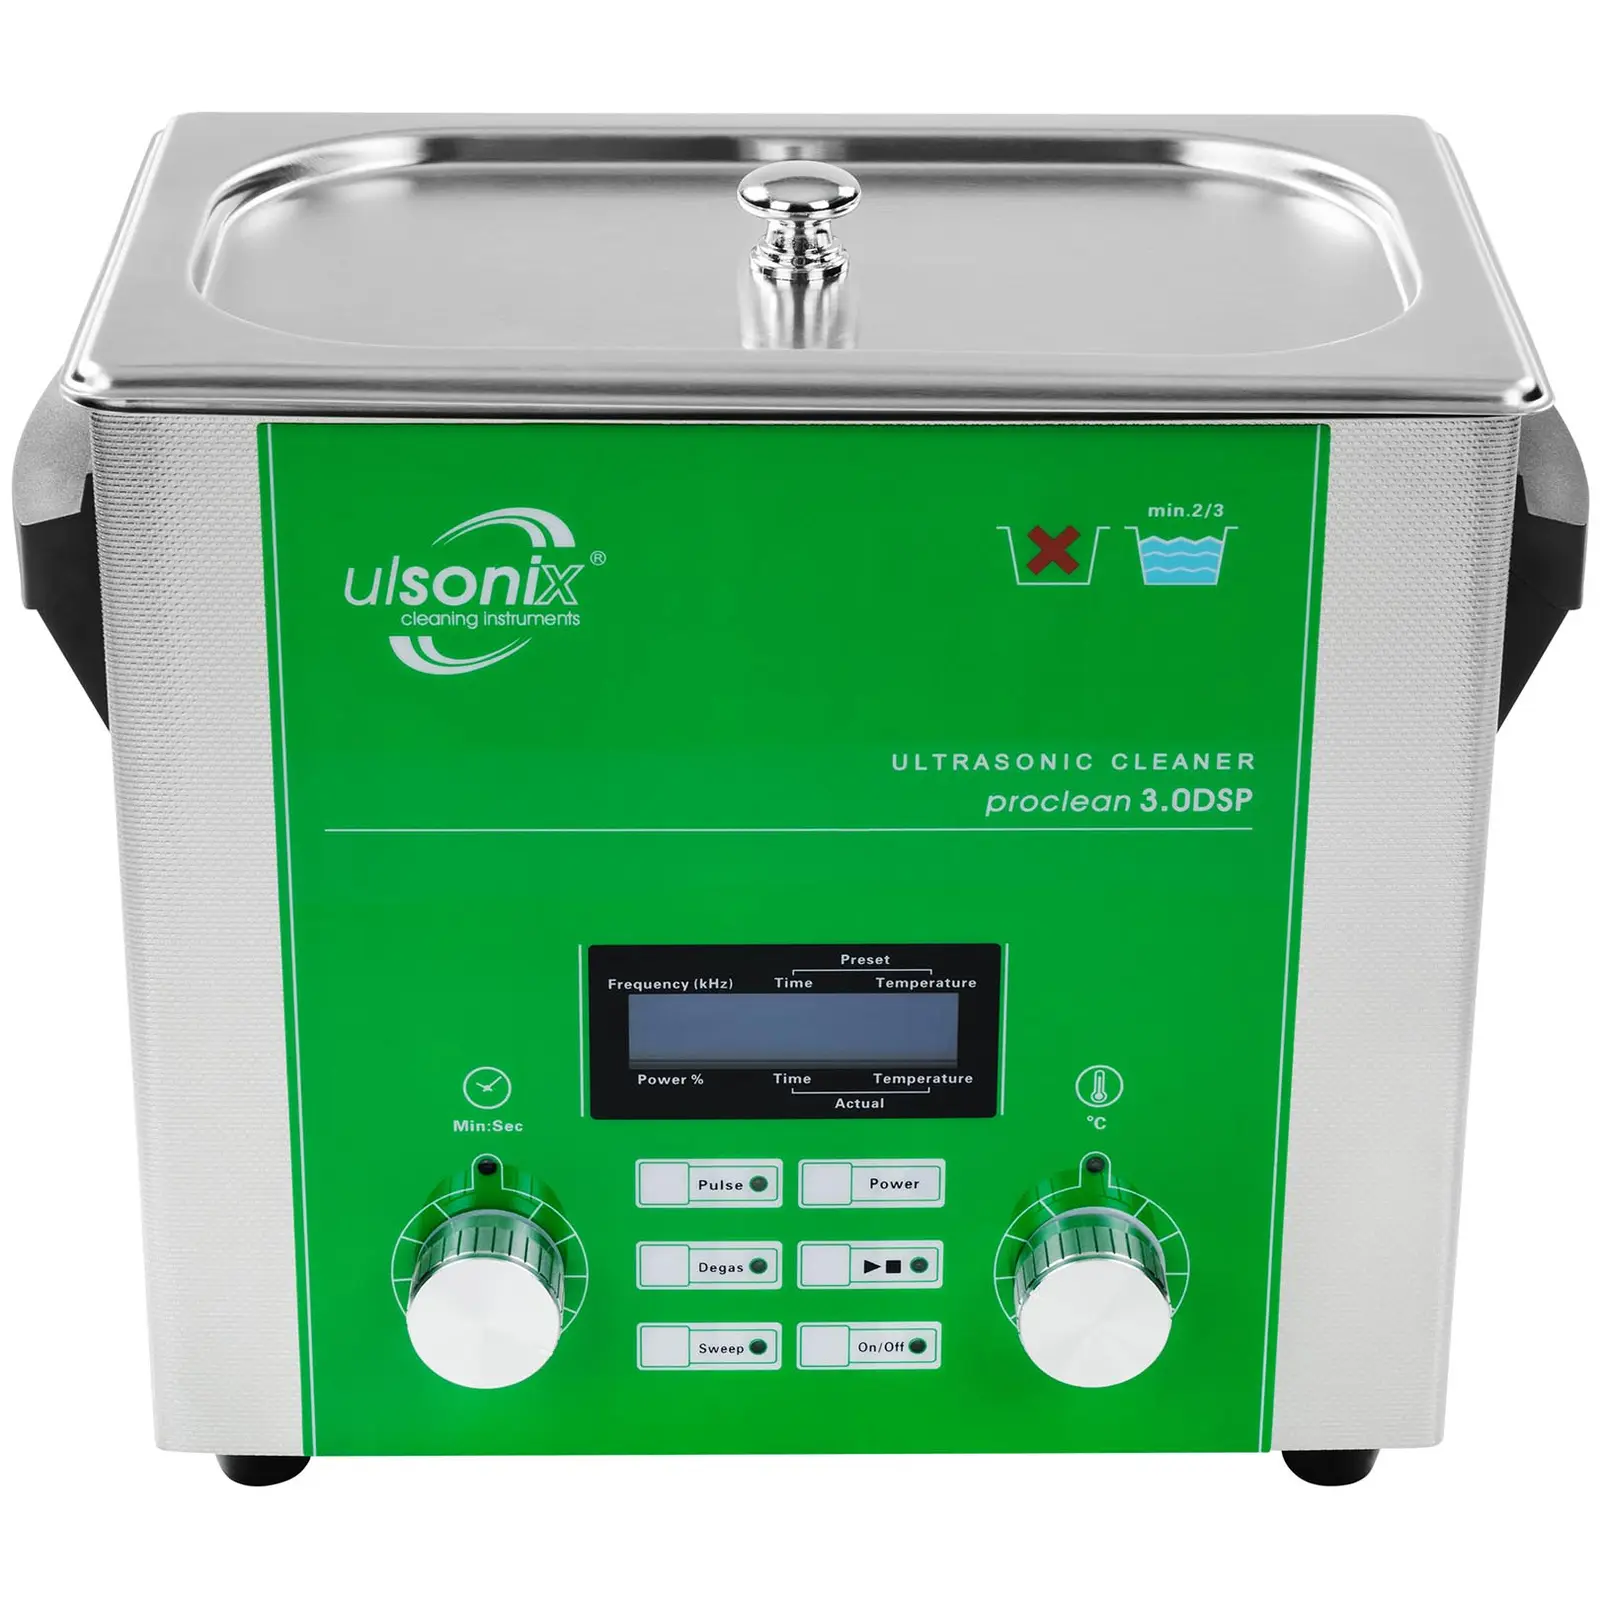 Ultrasonic Cleaner - 3 litres - degas - sweep - pulse - 2